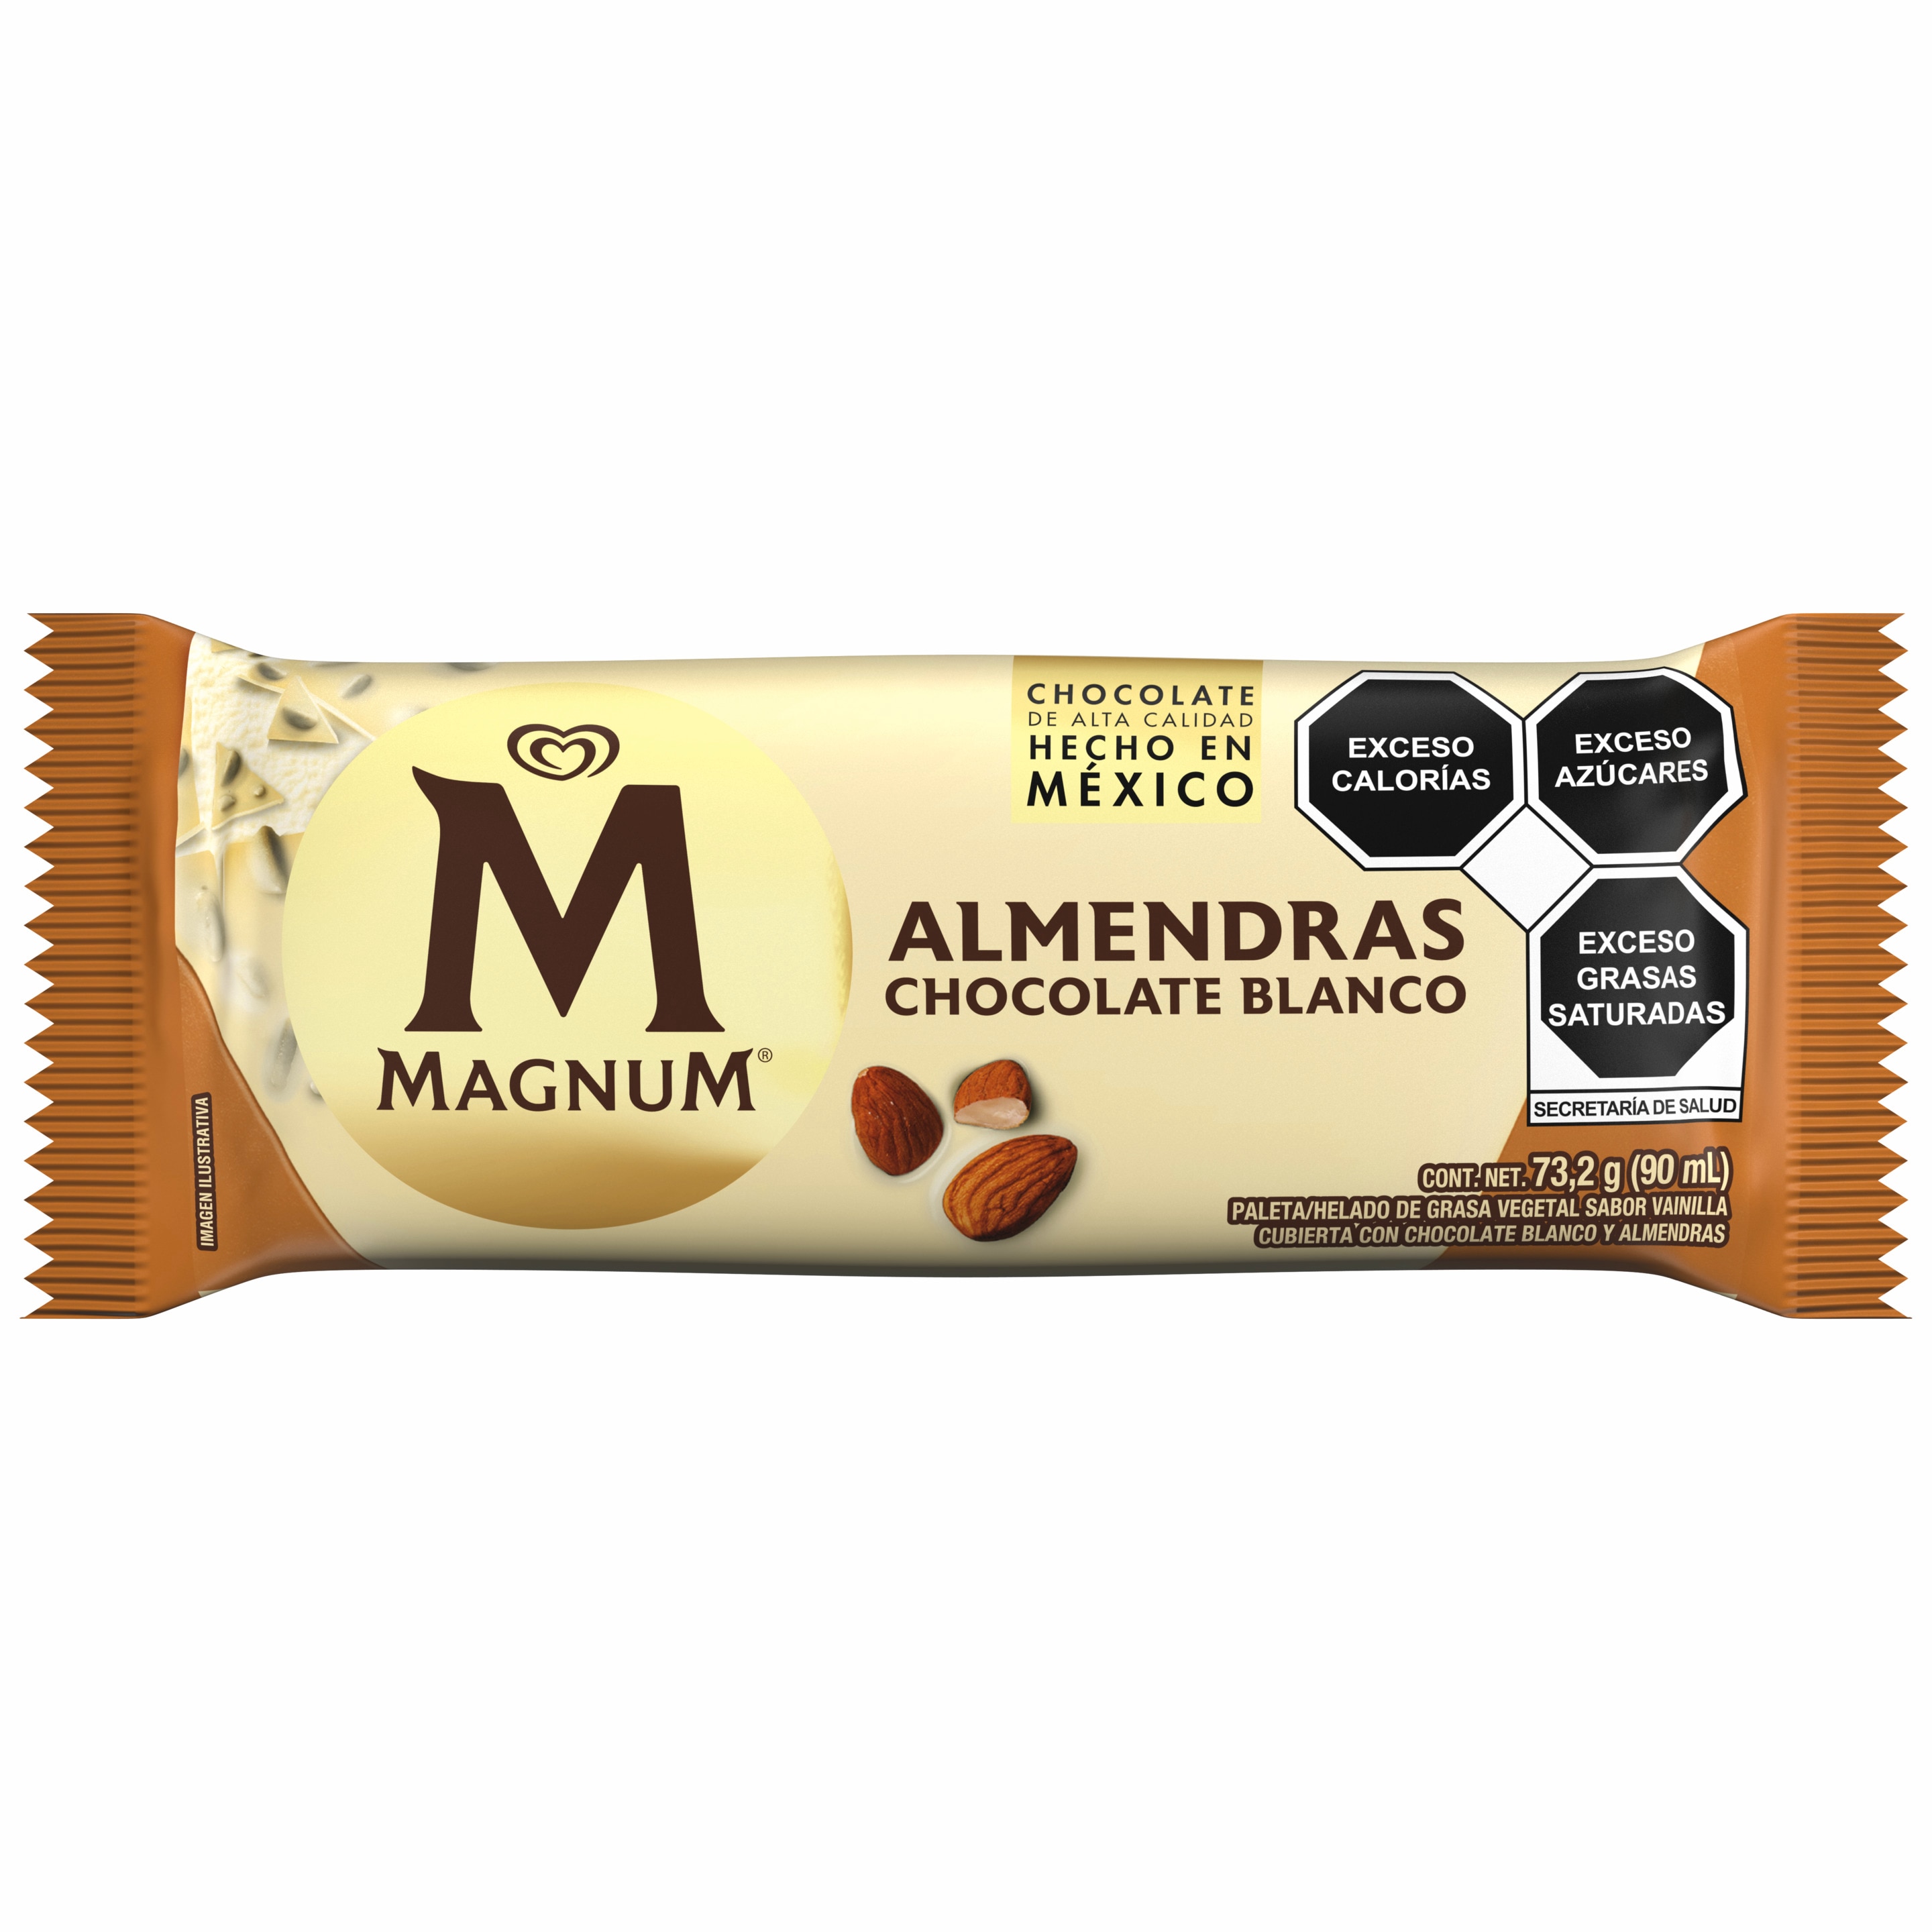 Magnum Almendras Chocolate Blanco